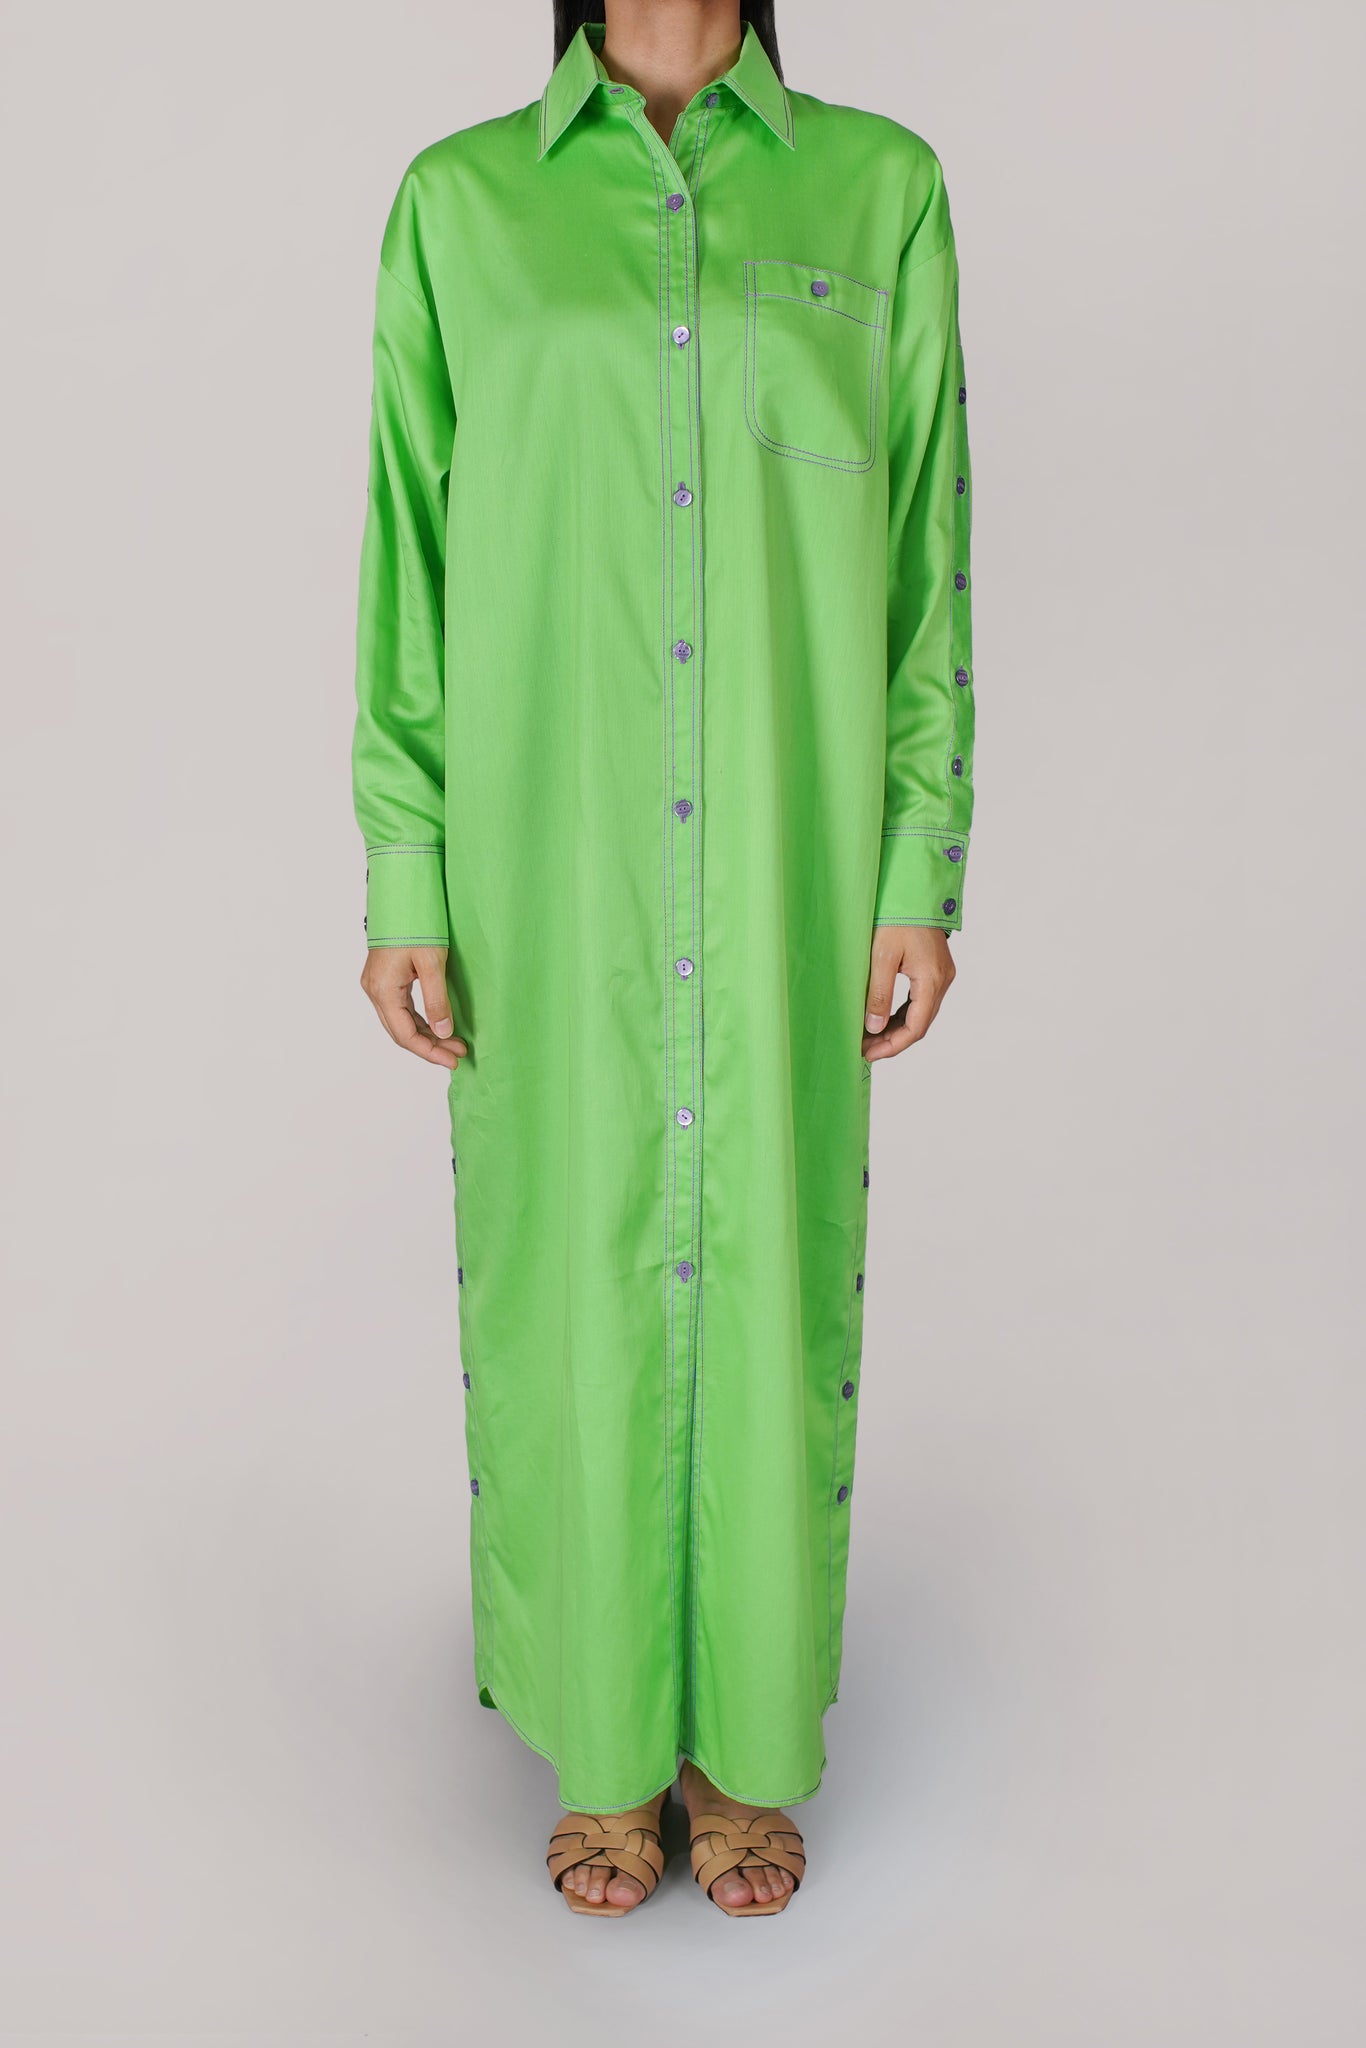 Bright Green with Purple Thread Button Shirt Dress (040)